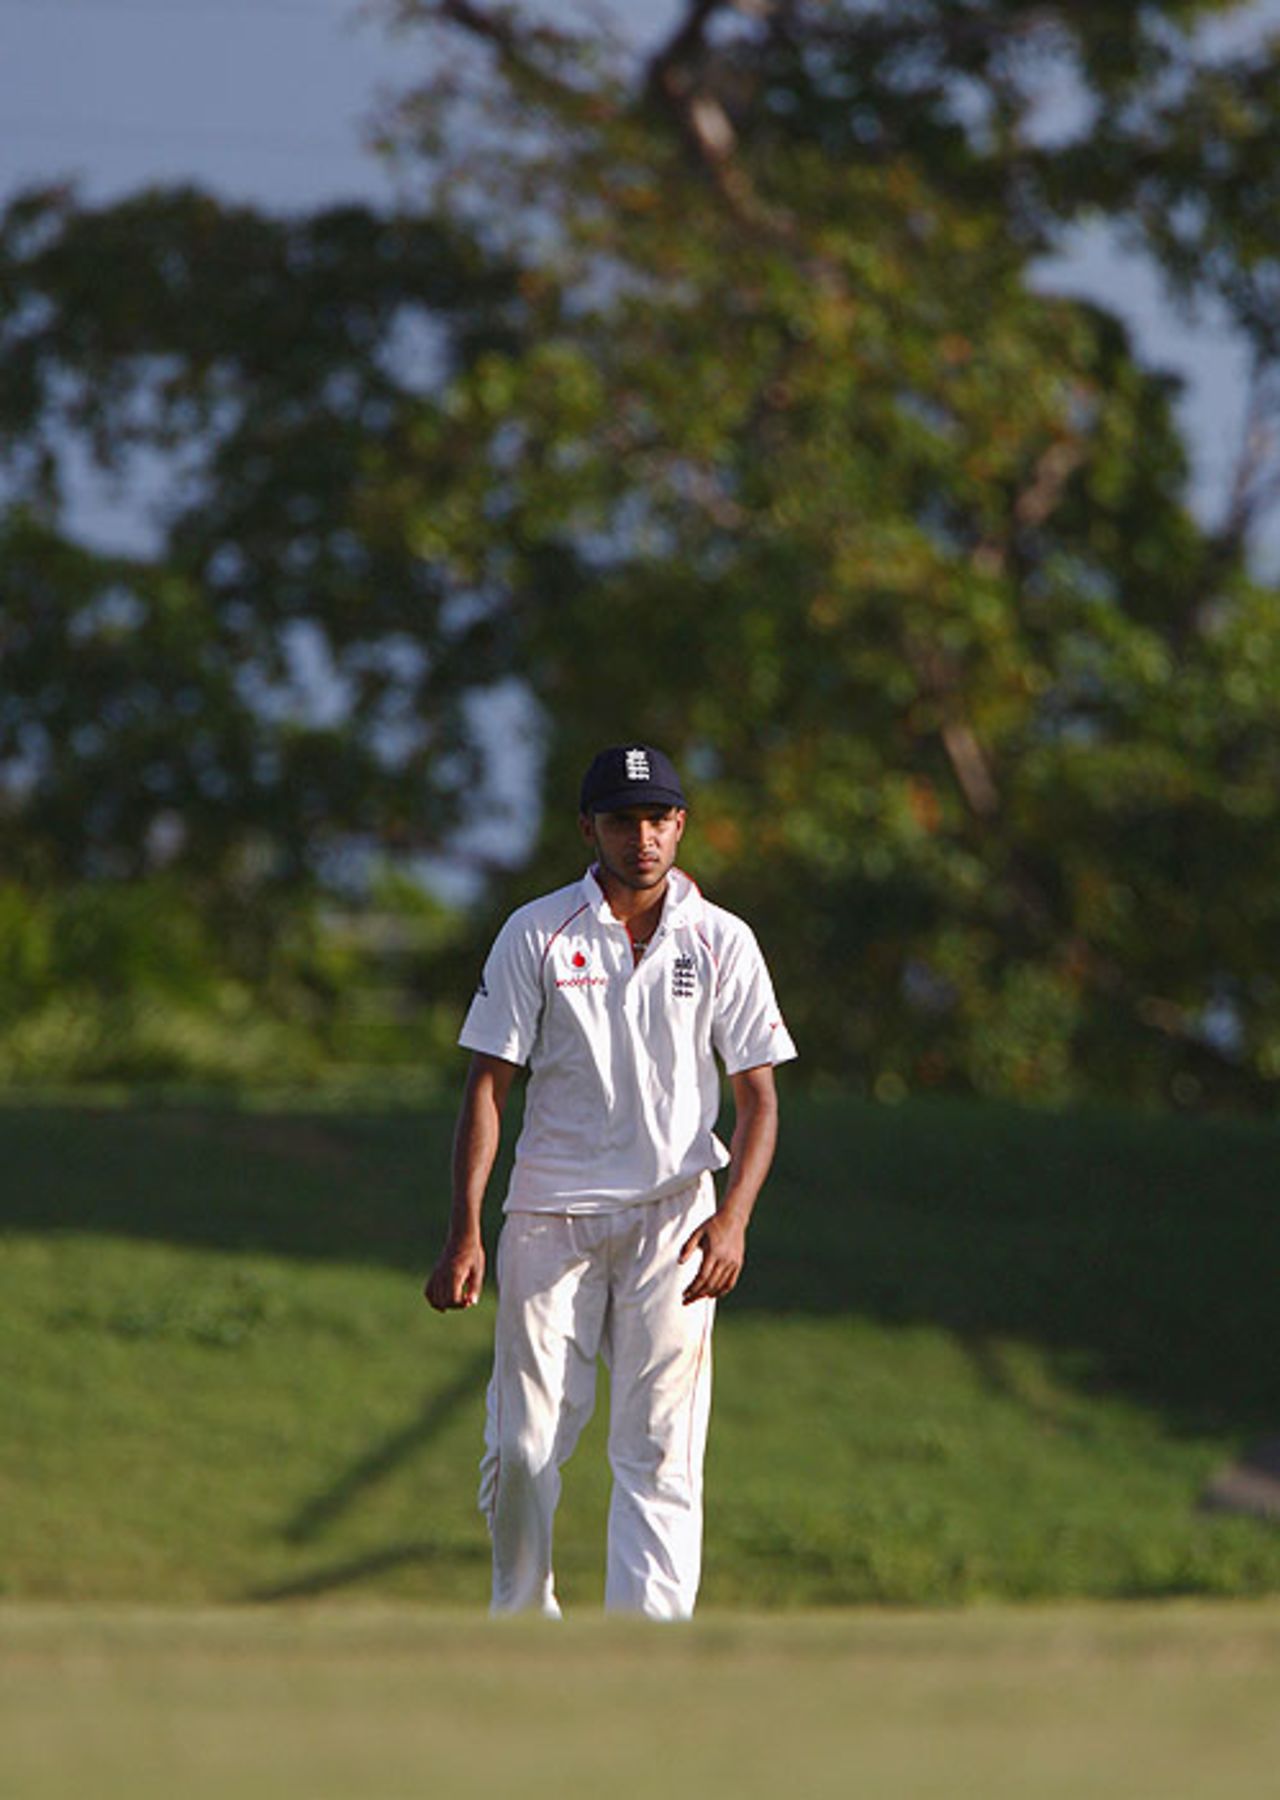 Adil Rashid fields during St Kitts' second innings at Basseterre, St Kitts Invitational XI v England XI, Warner Park, January 27, 2009